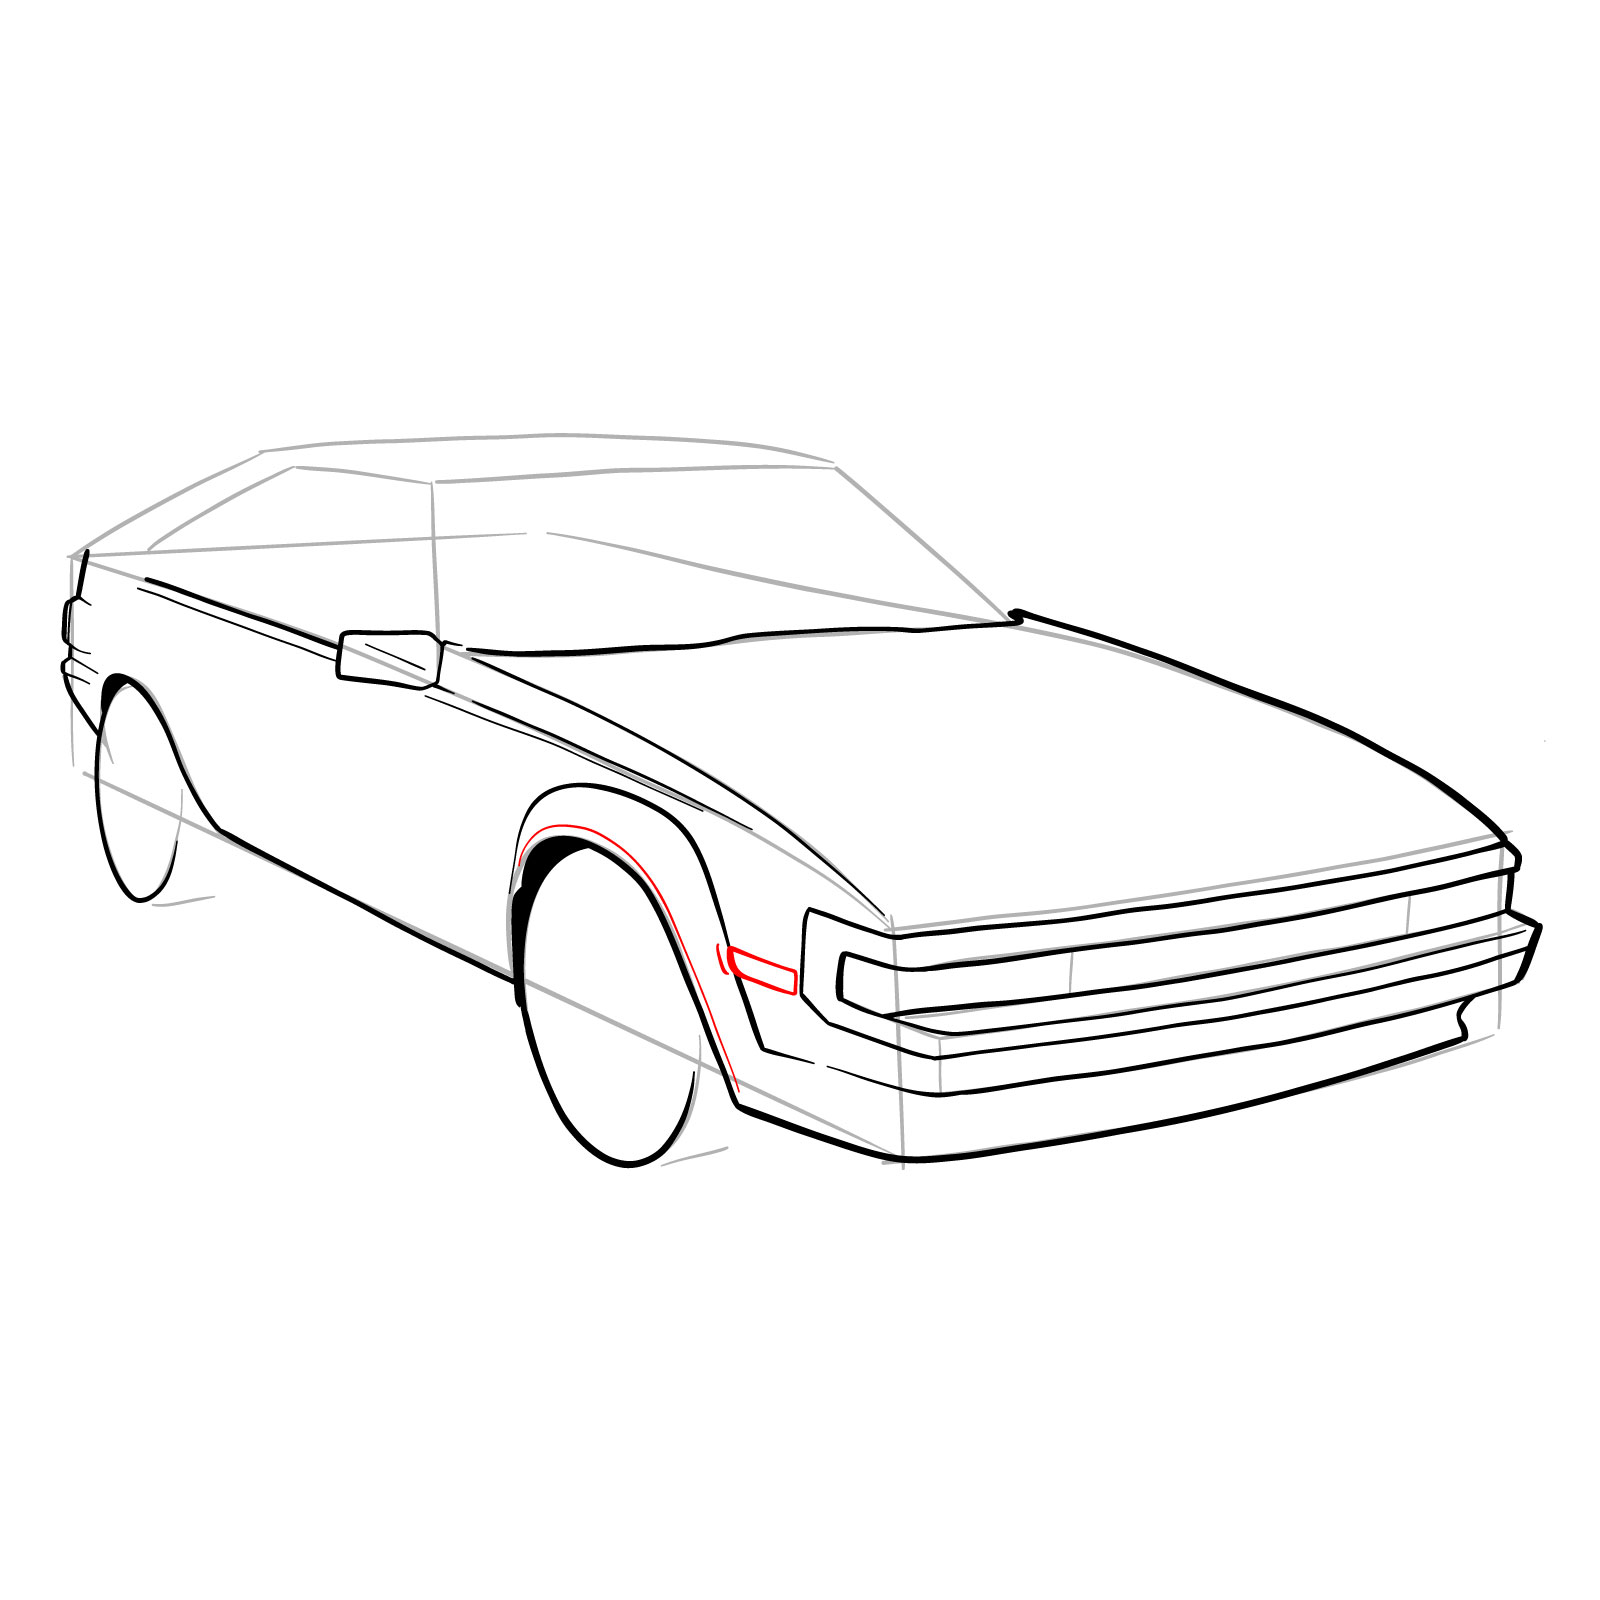 How to draw a 1985 Toyota Celica Supra P Type MK 2 - step 18